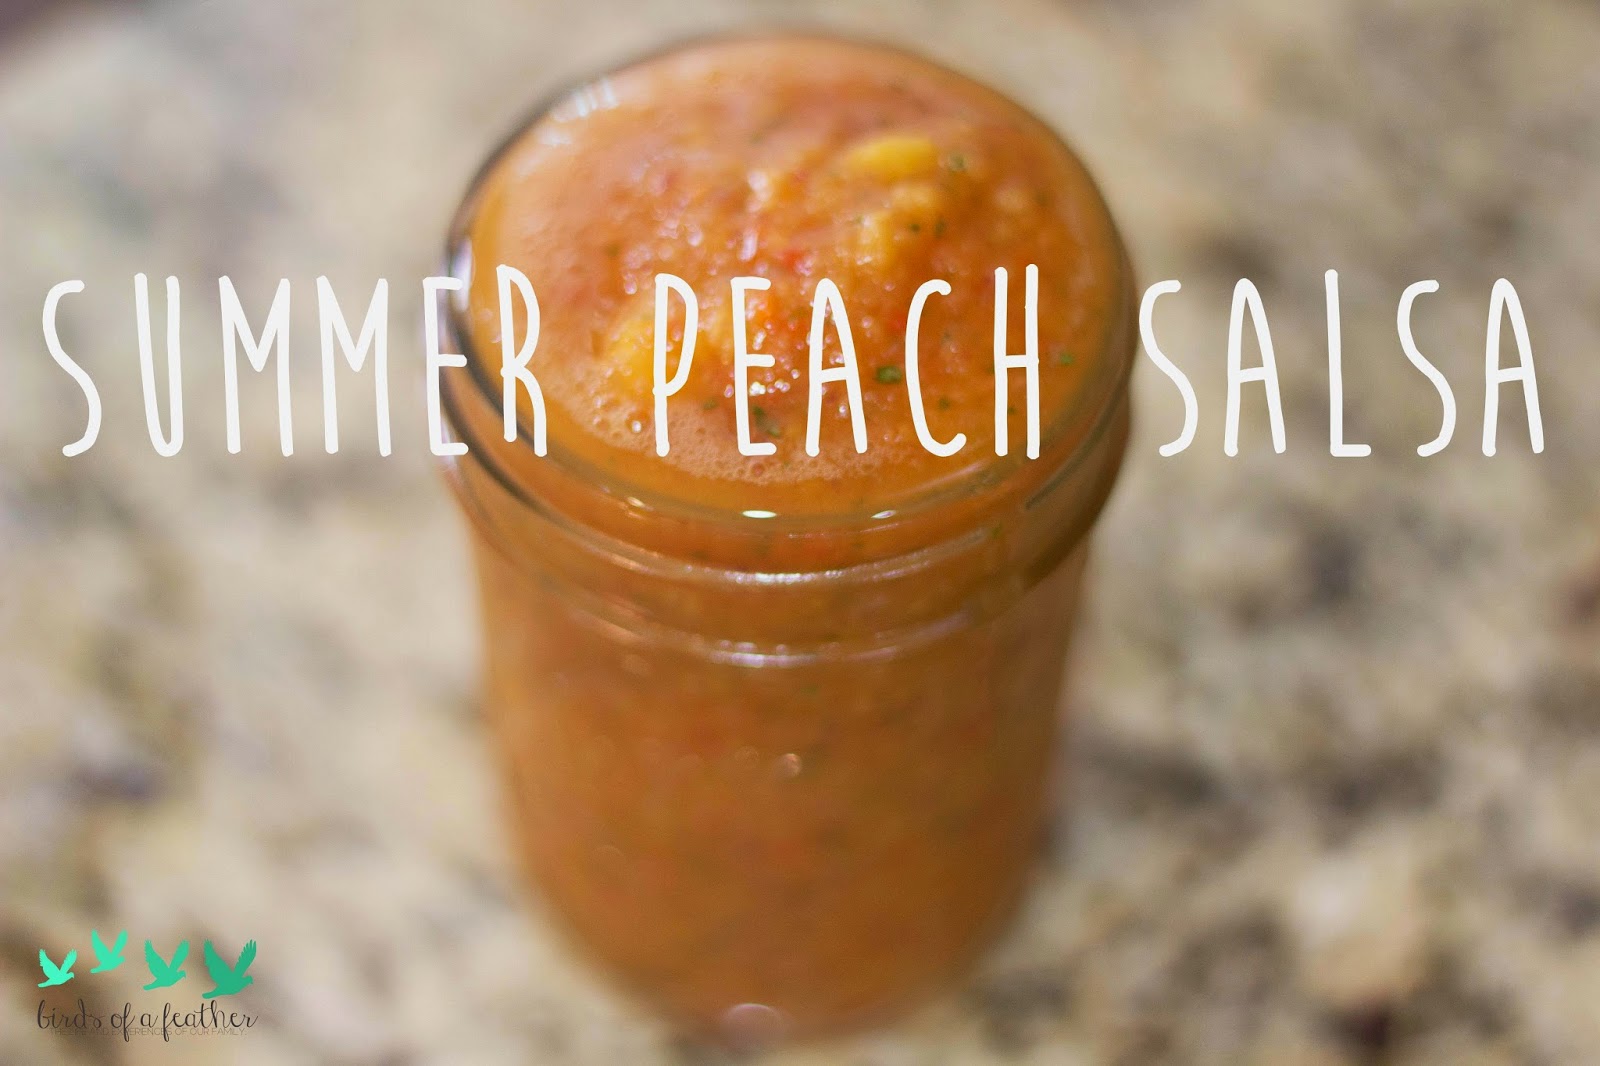 http://www.theweatheredpalate.com/2014/08/summer-peach-salsa.html